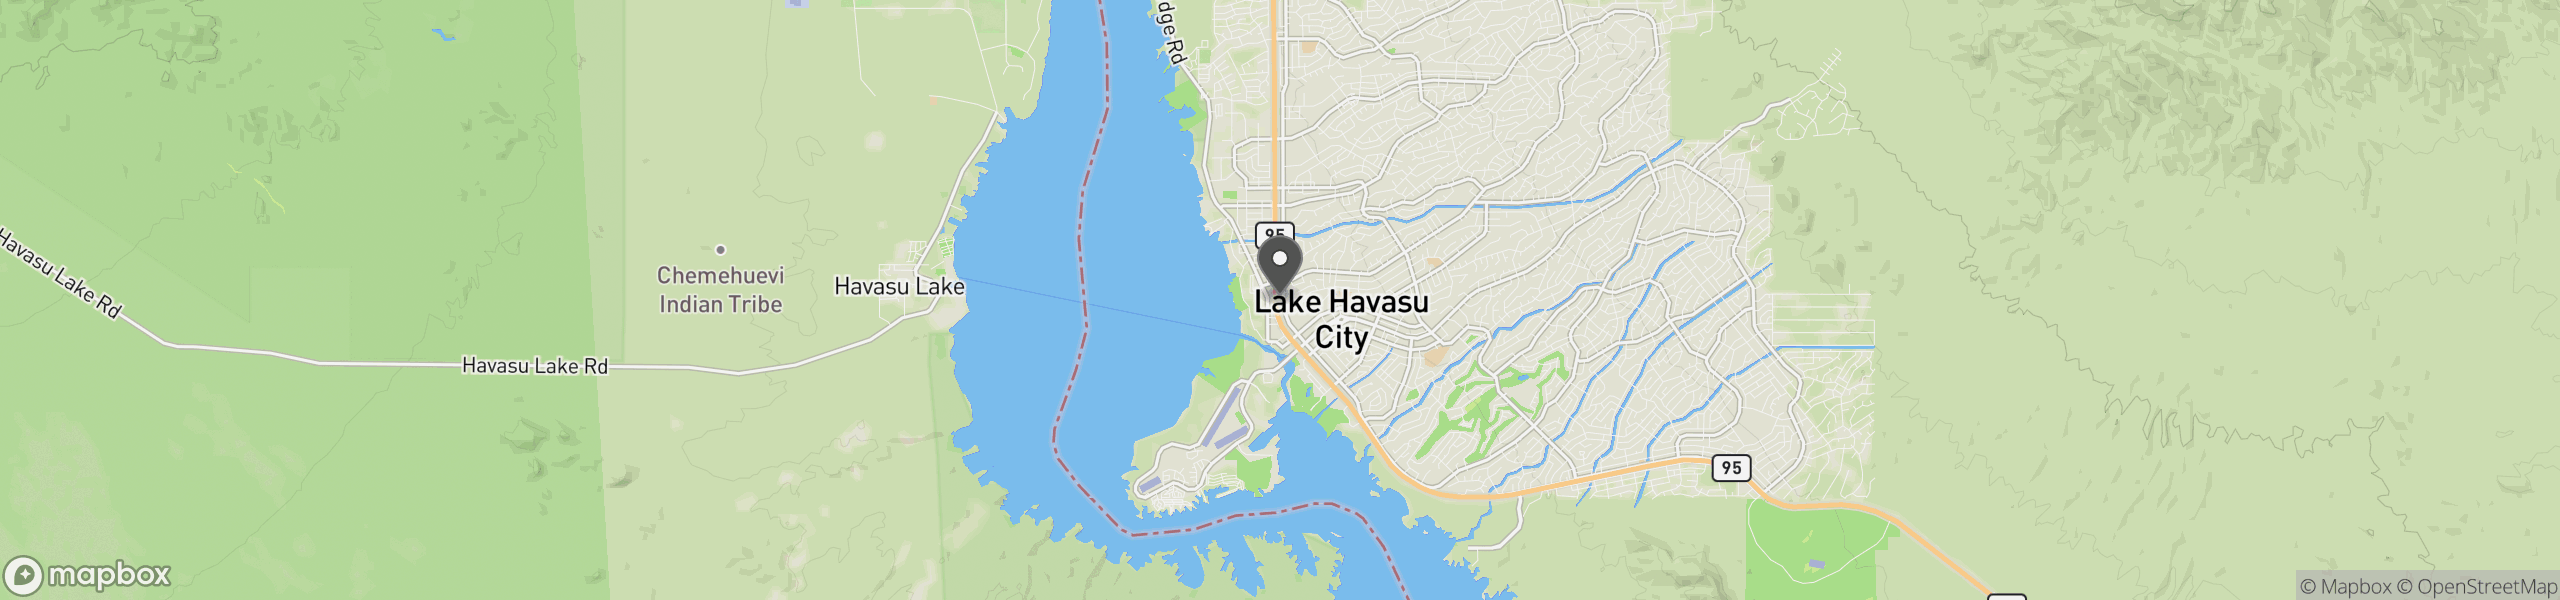 Lake Havasu City, AZ 86403